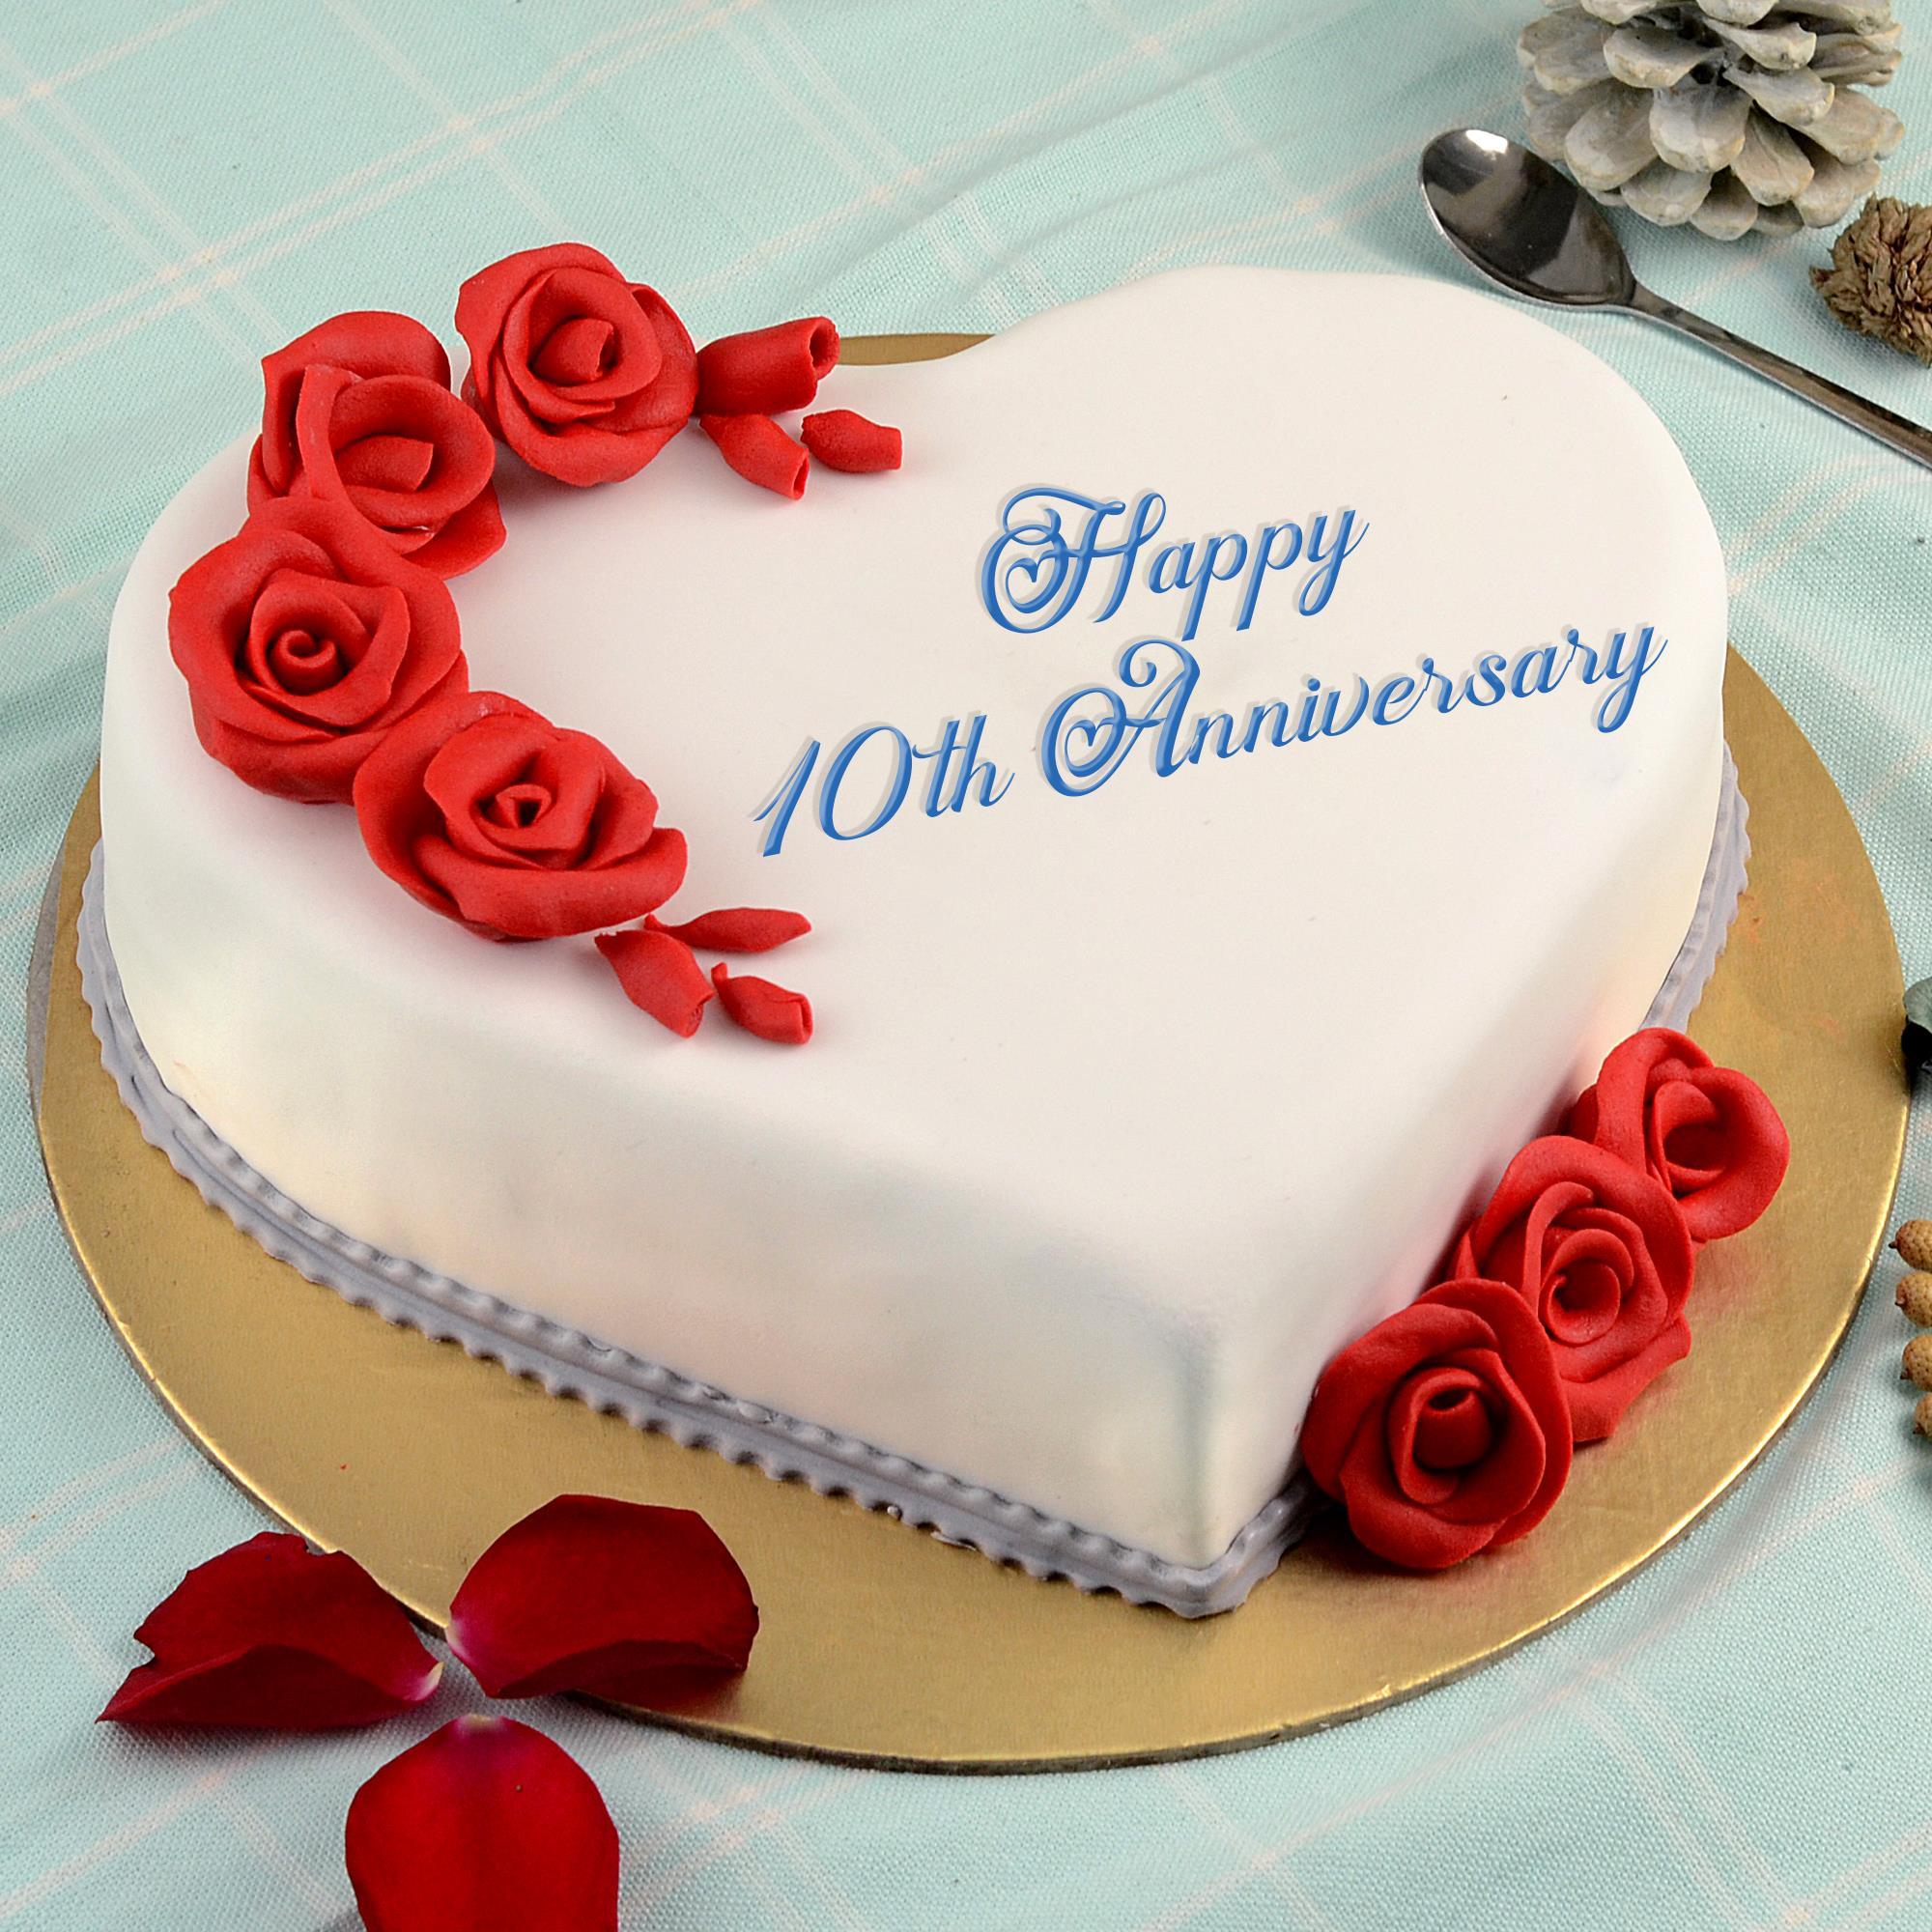 Happy Tenth Wedding Anniversary Cake DSC_5244 | Recently cel… | Flickr